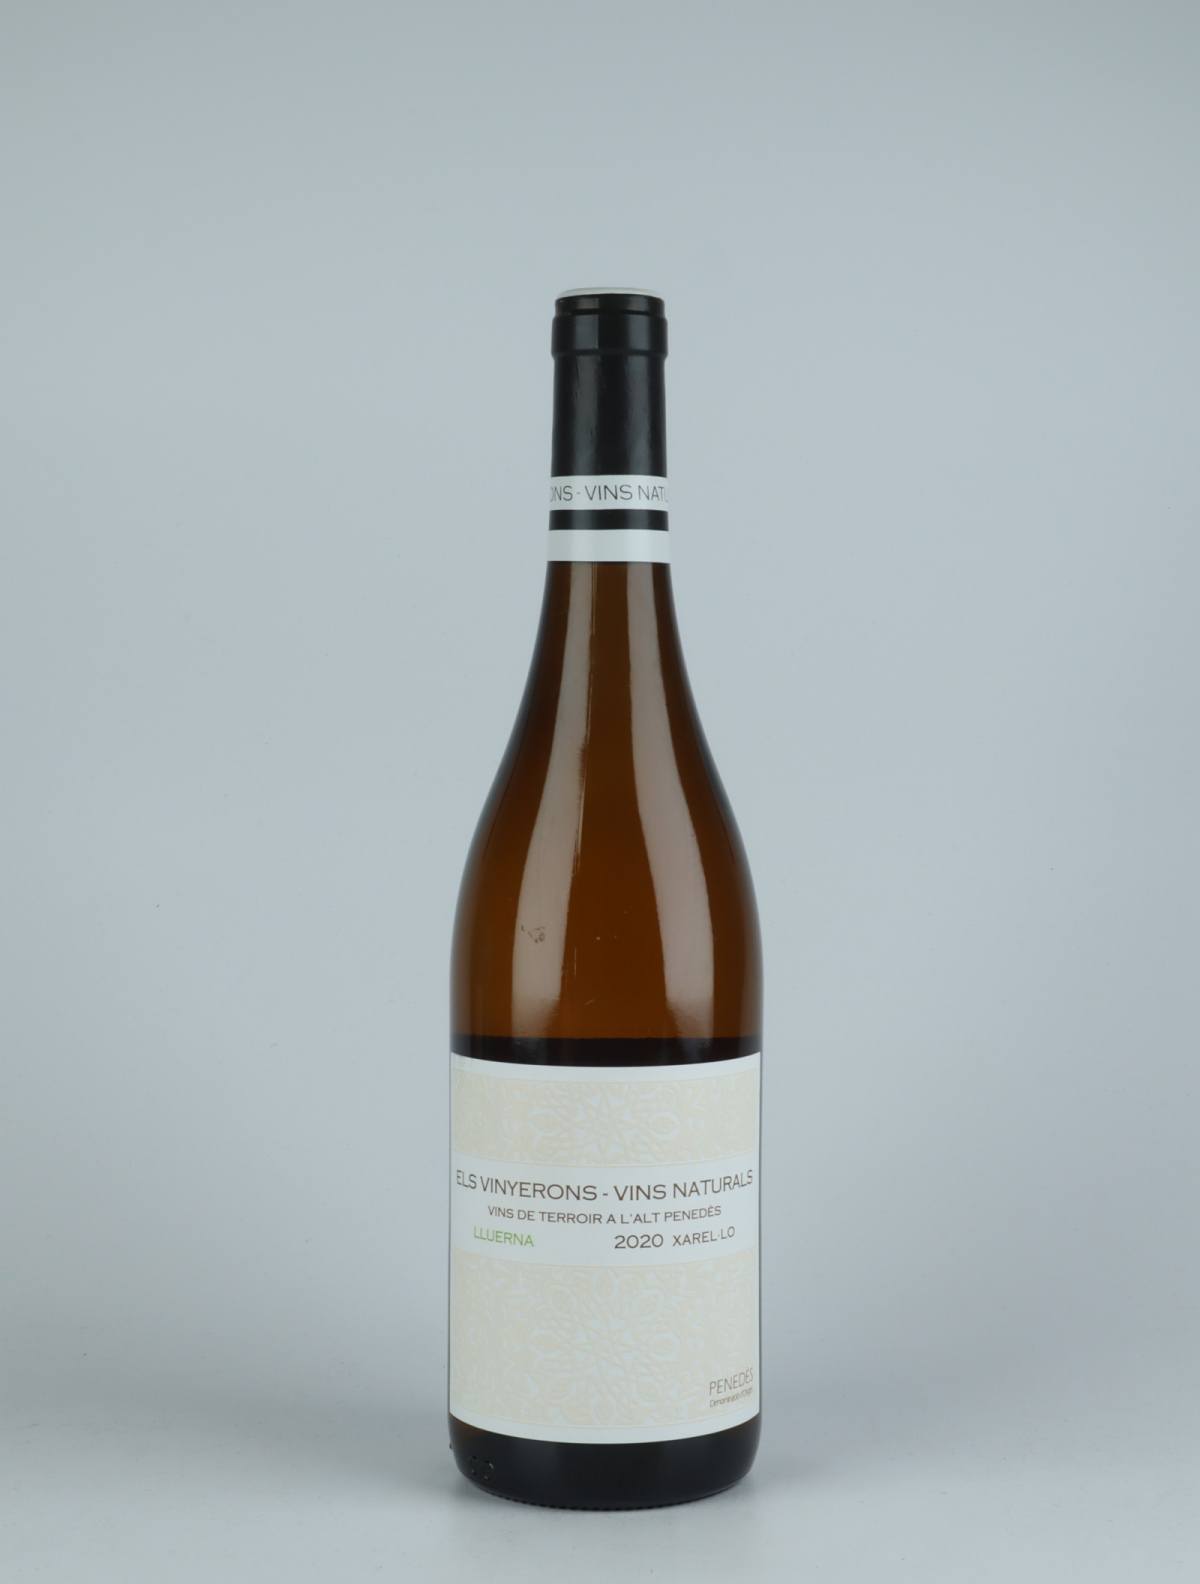 A bottle 2020 Lluerna White wine from Els Vinyerons, Penedès in Spain